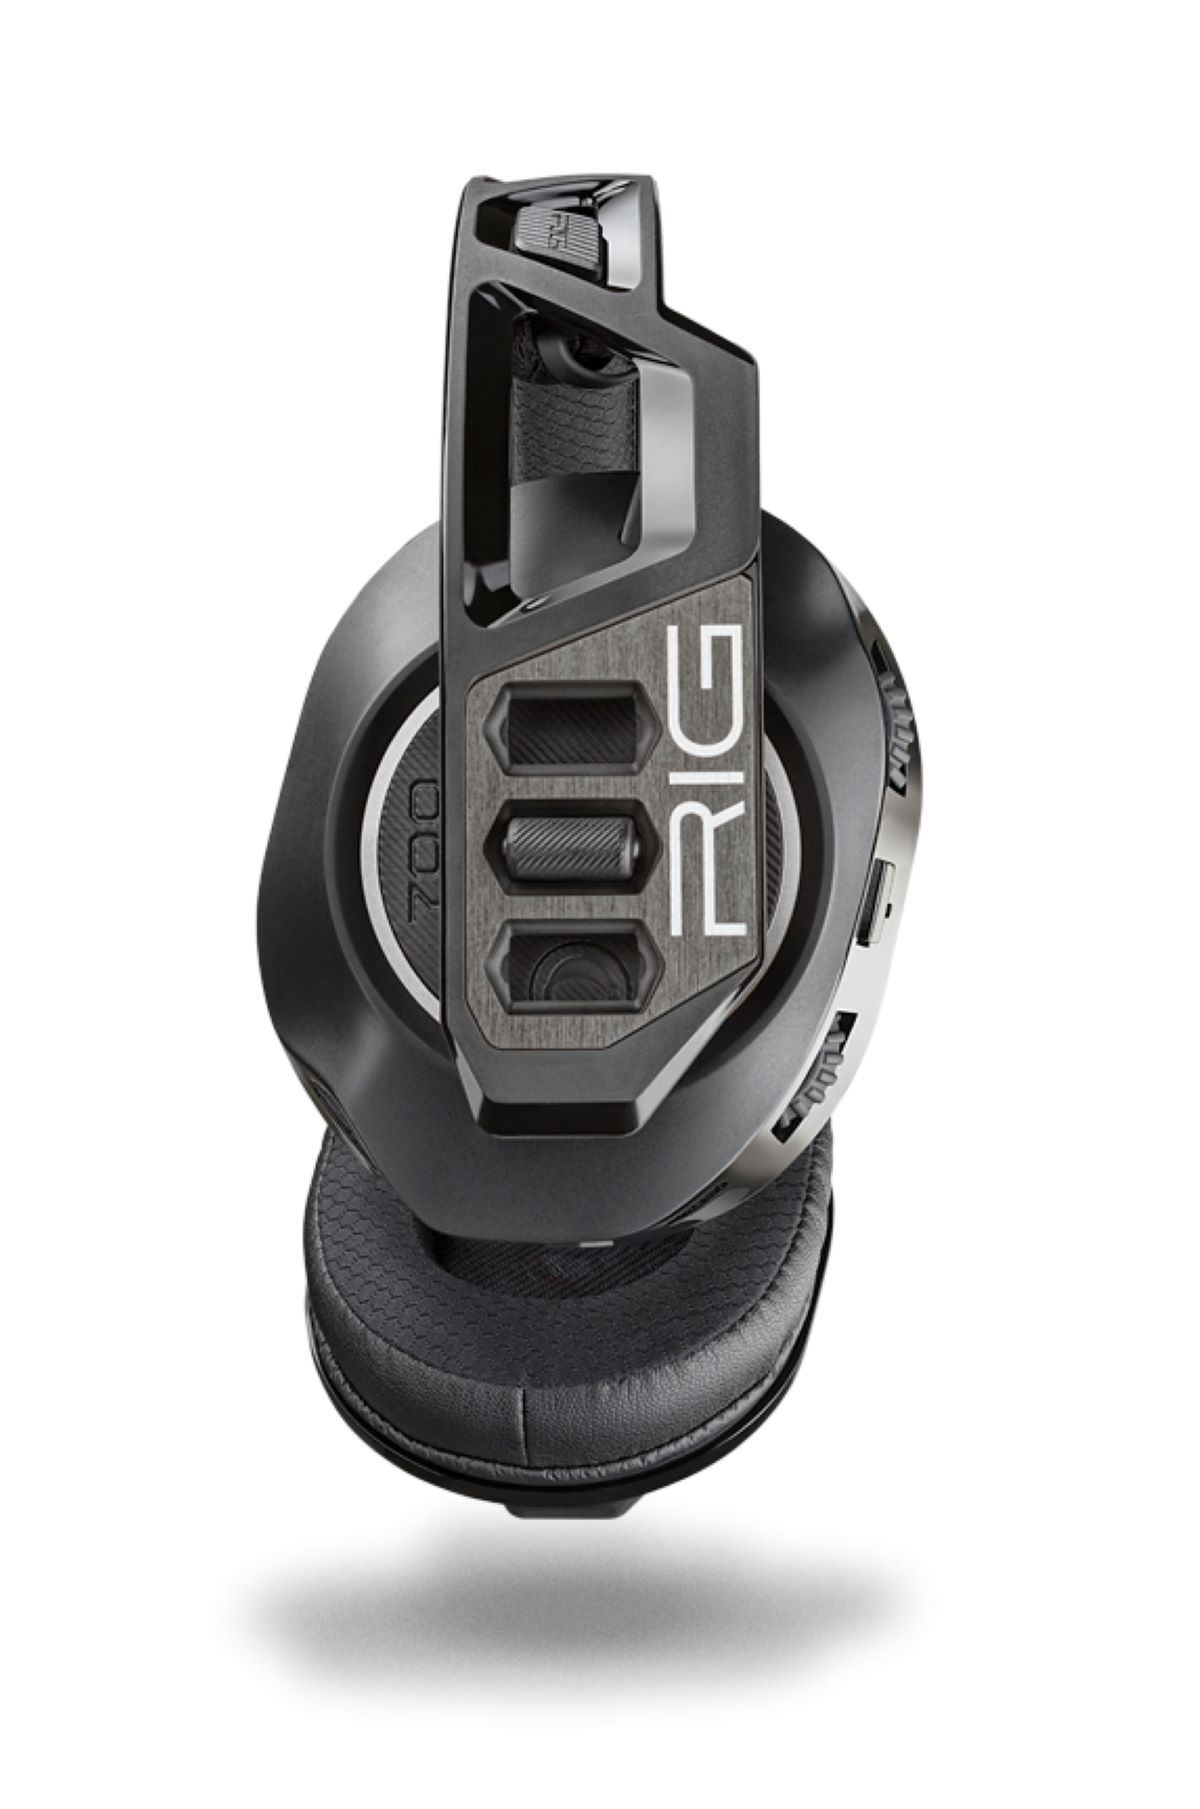 Over-ear schwarz NACON RIG Bluetooth Gaming-Headset 700HX,